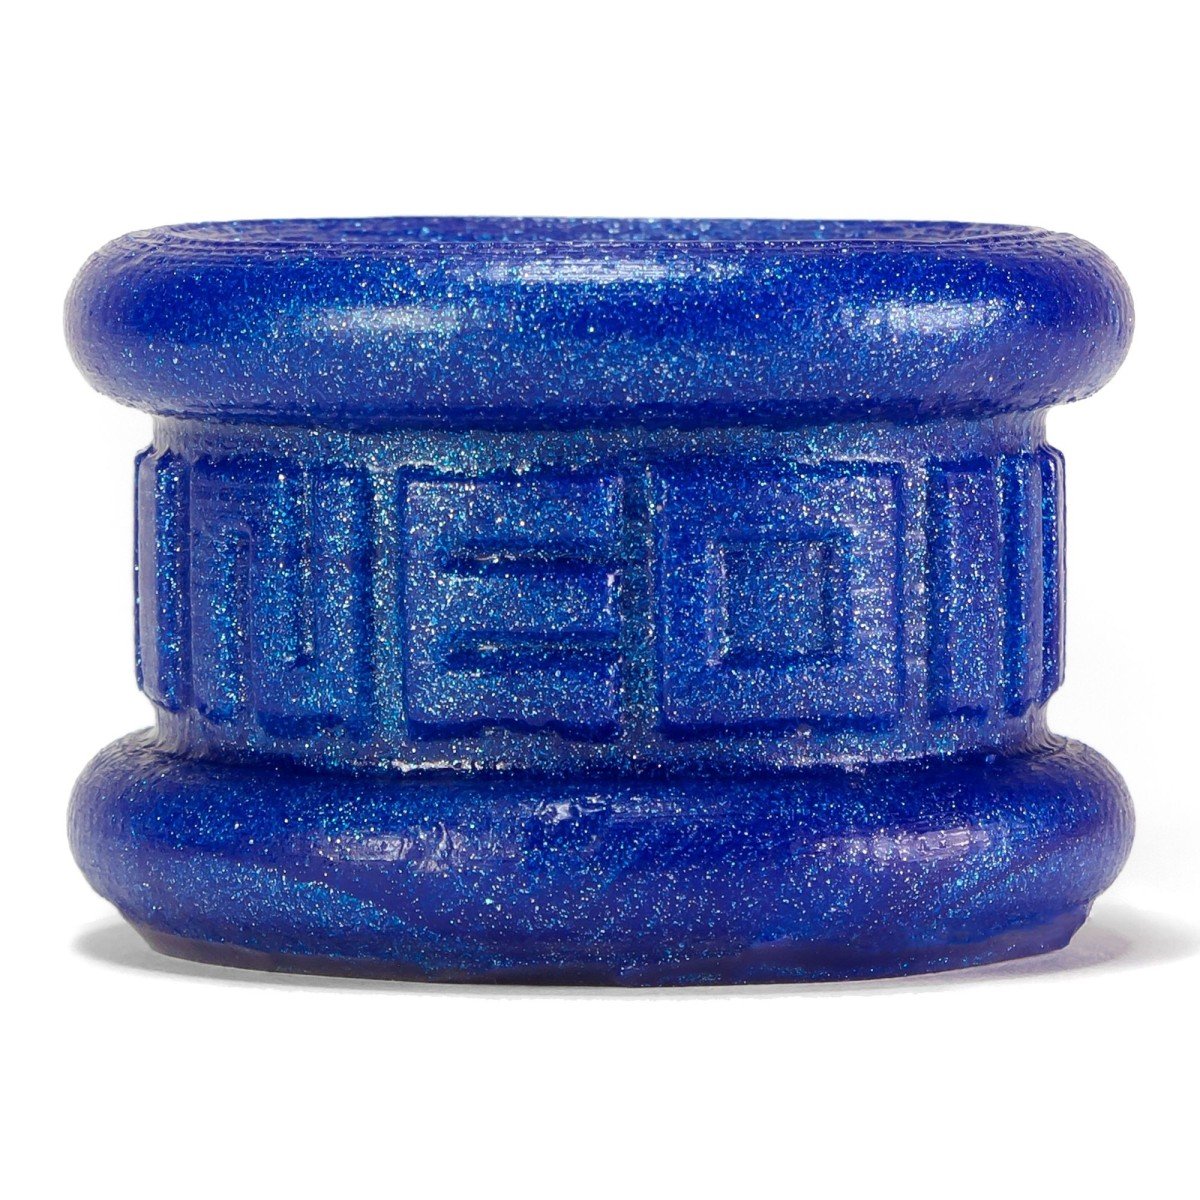 Natahovač varlat Oxballs Neo krátký modrý, silikonový natahovač varlat 3,2 cm